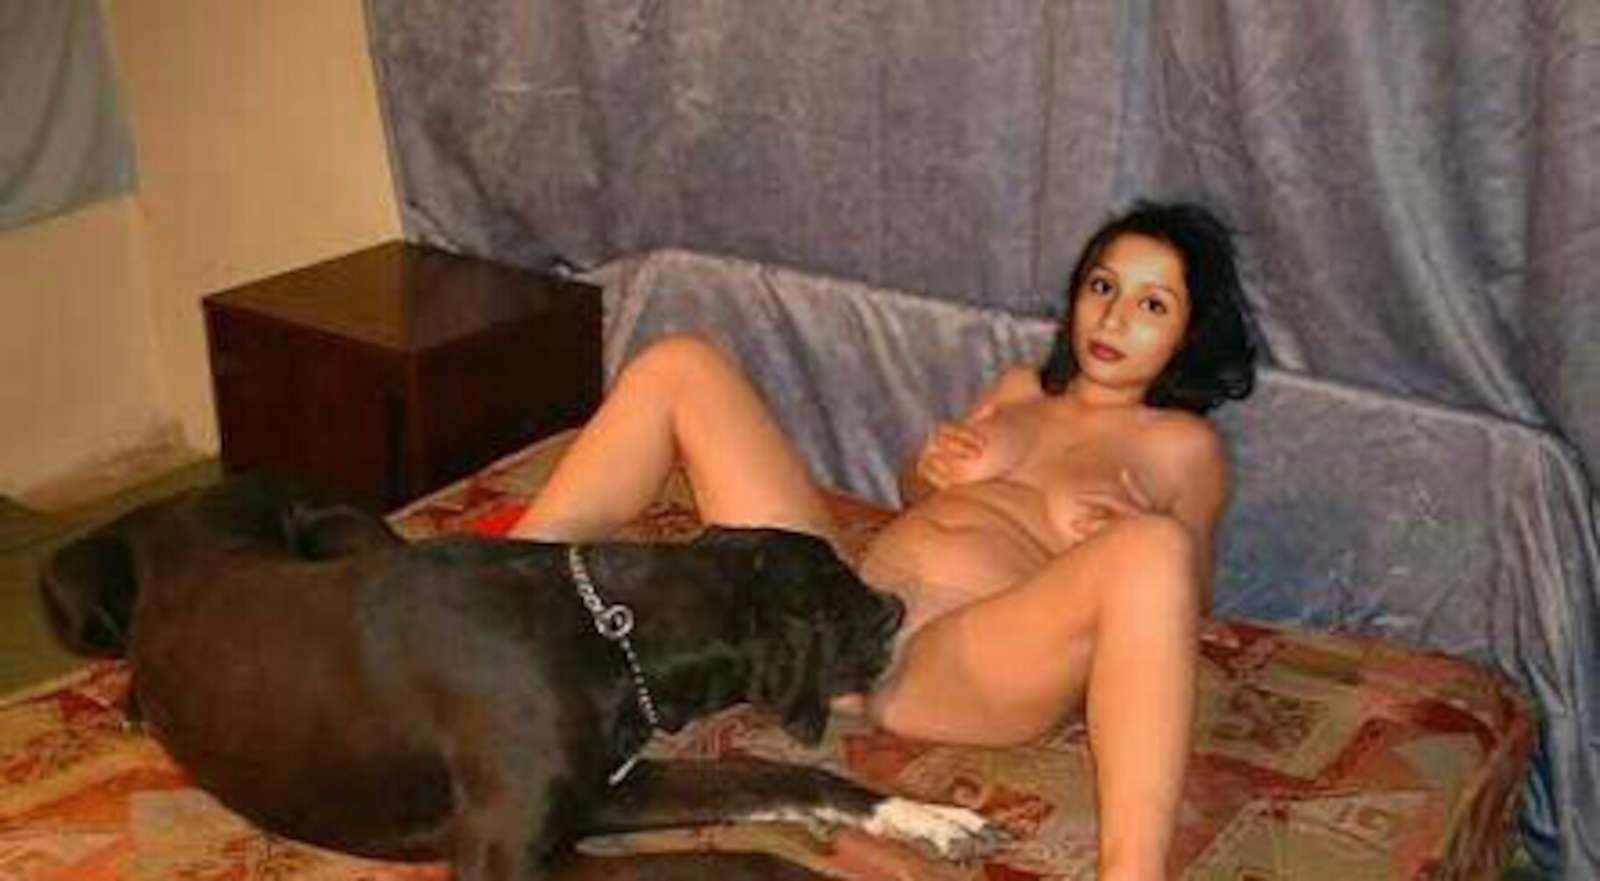 Her dog порно фото 48